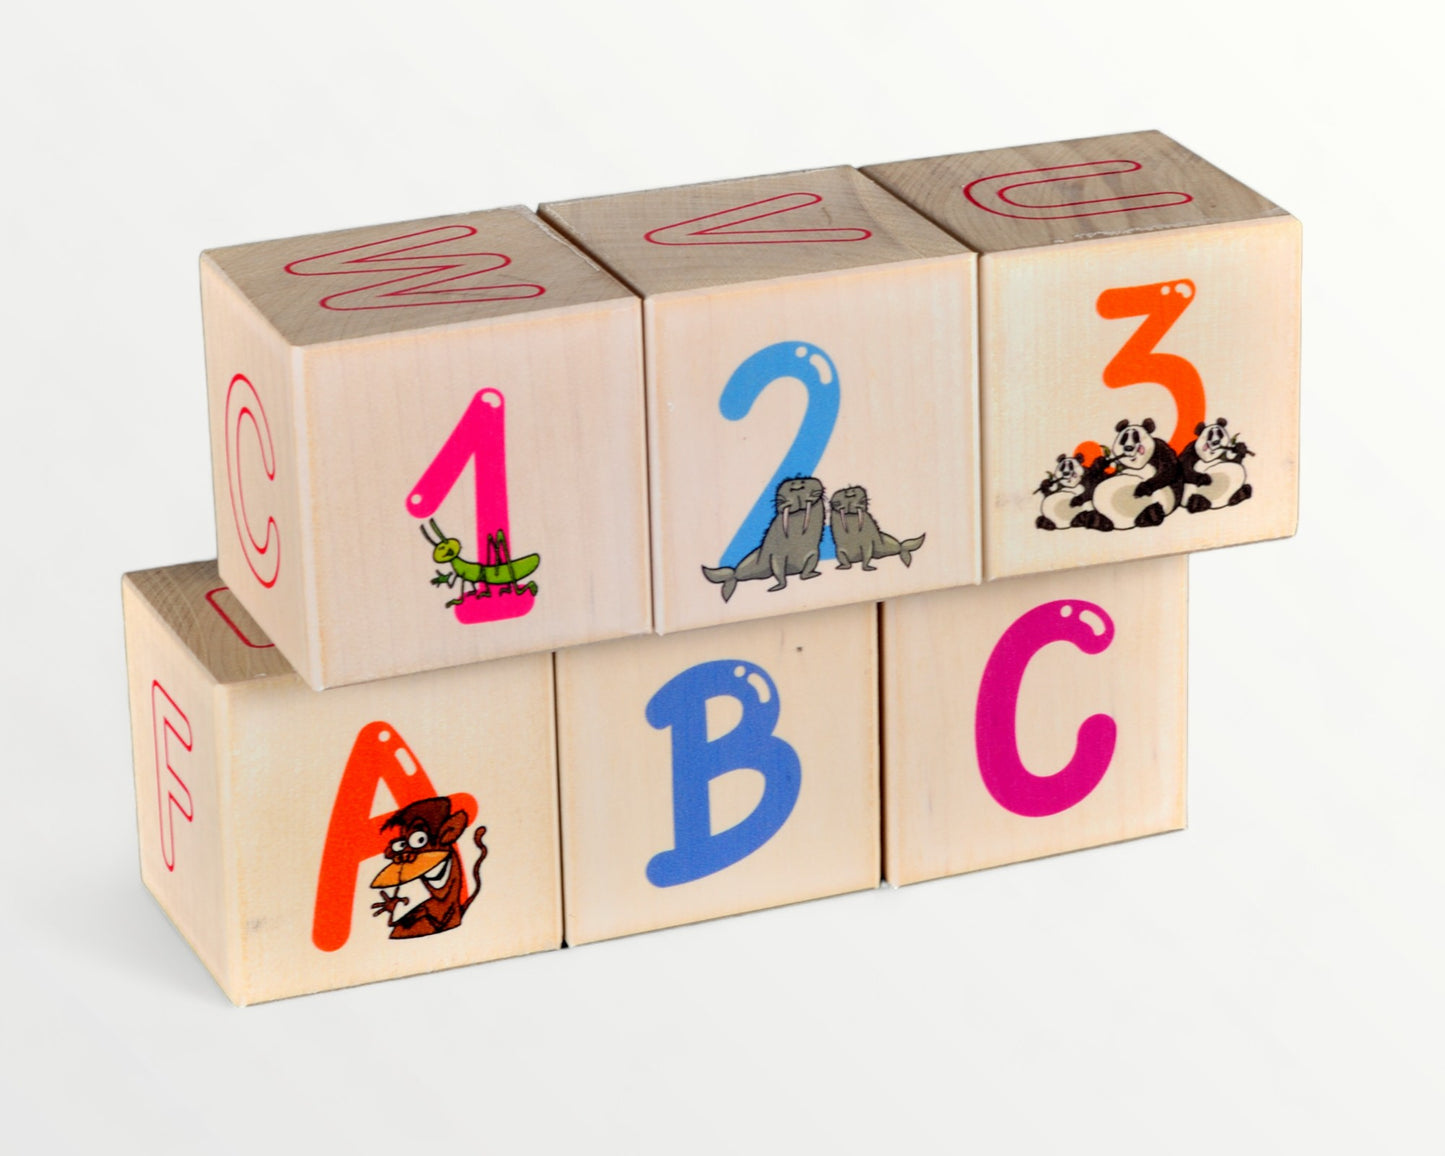 Wooden letter blocks - latin alphabet - 20 pcs